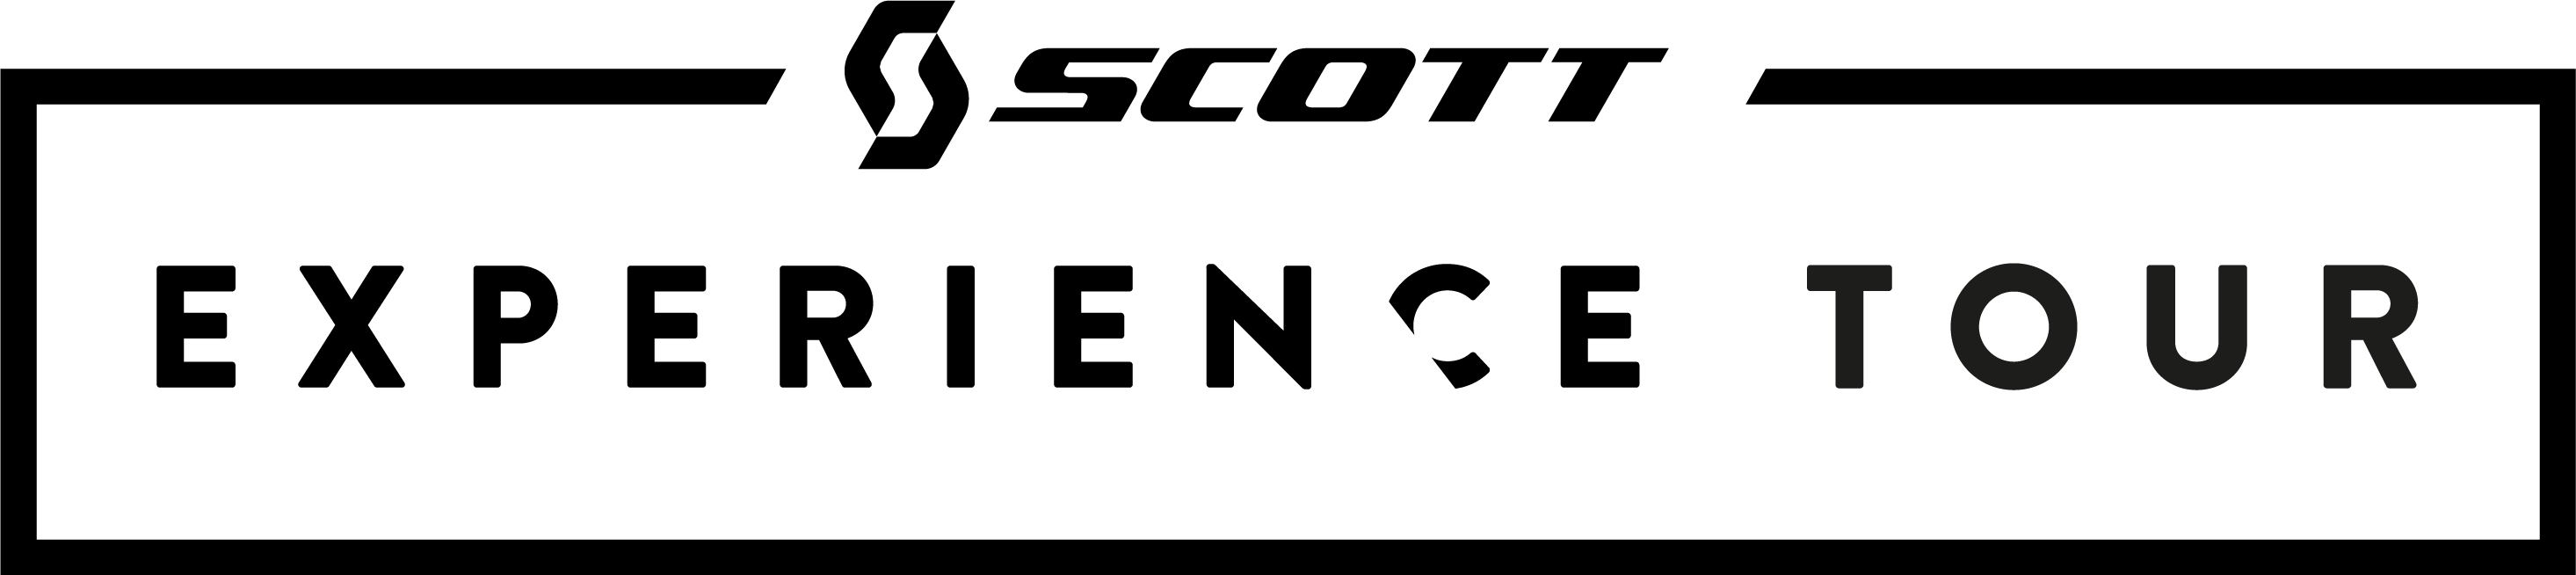 The SCOTT Experience Tour